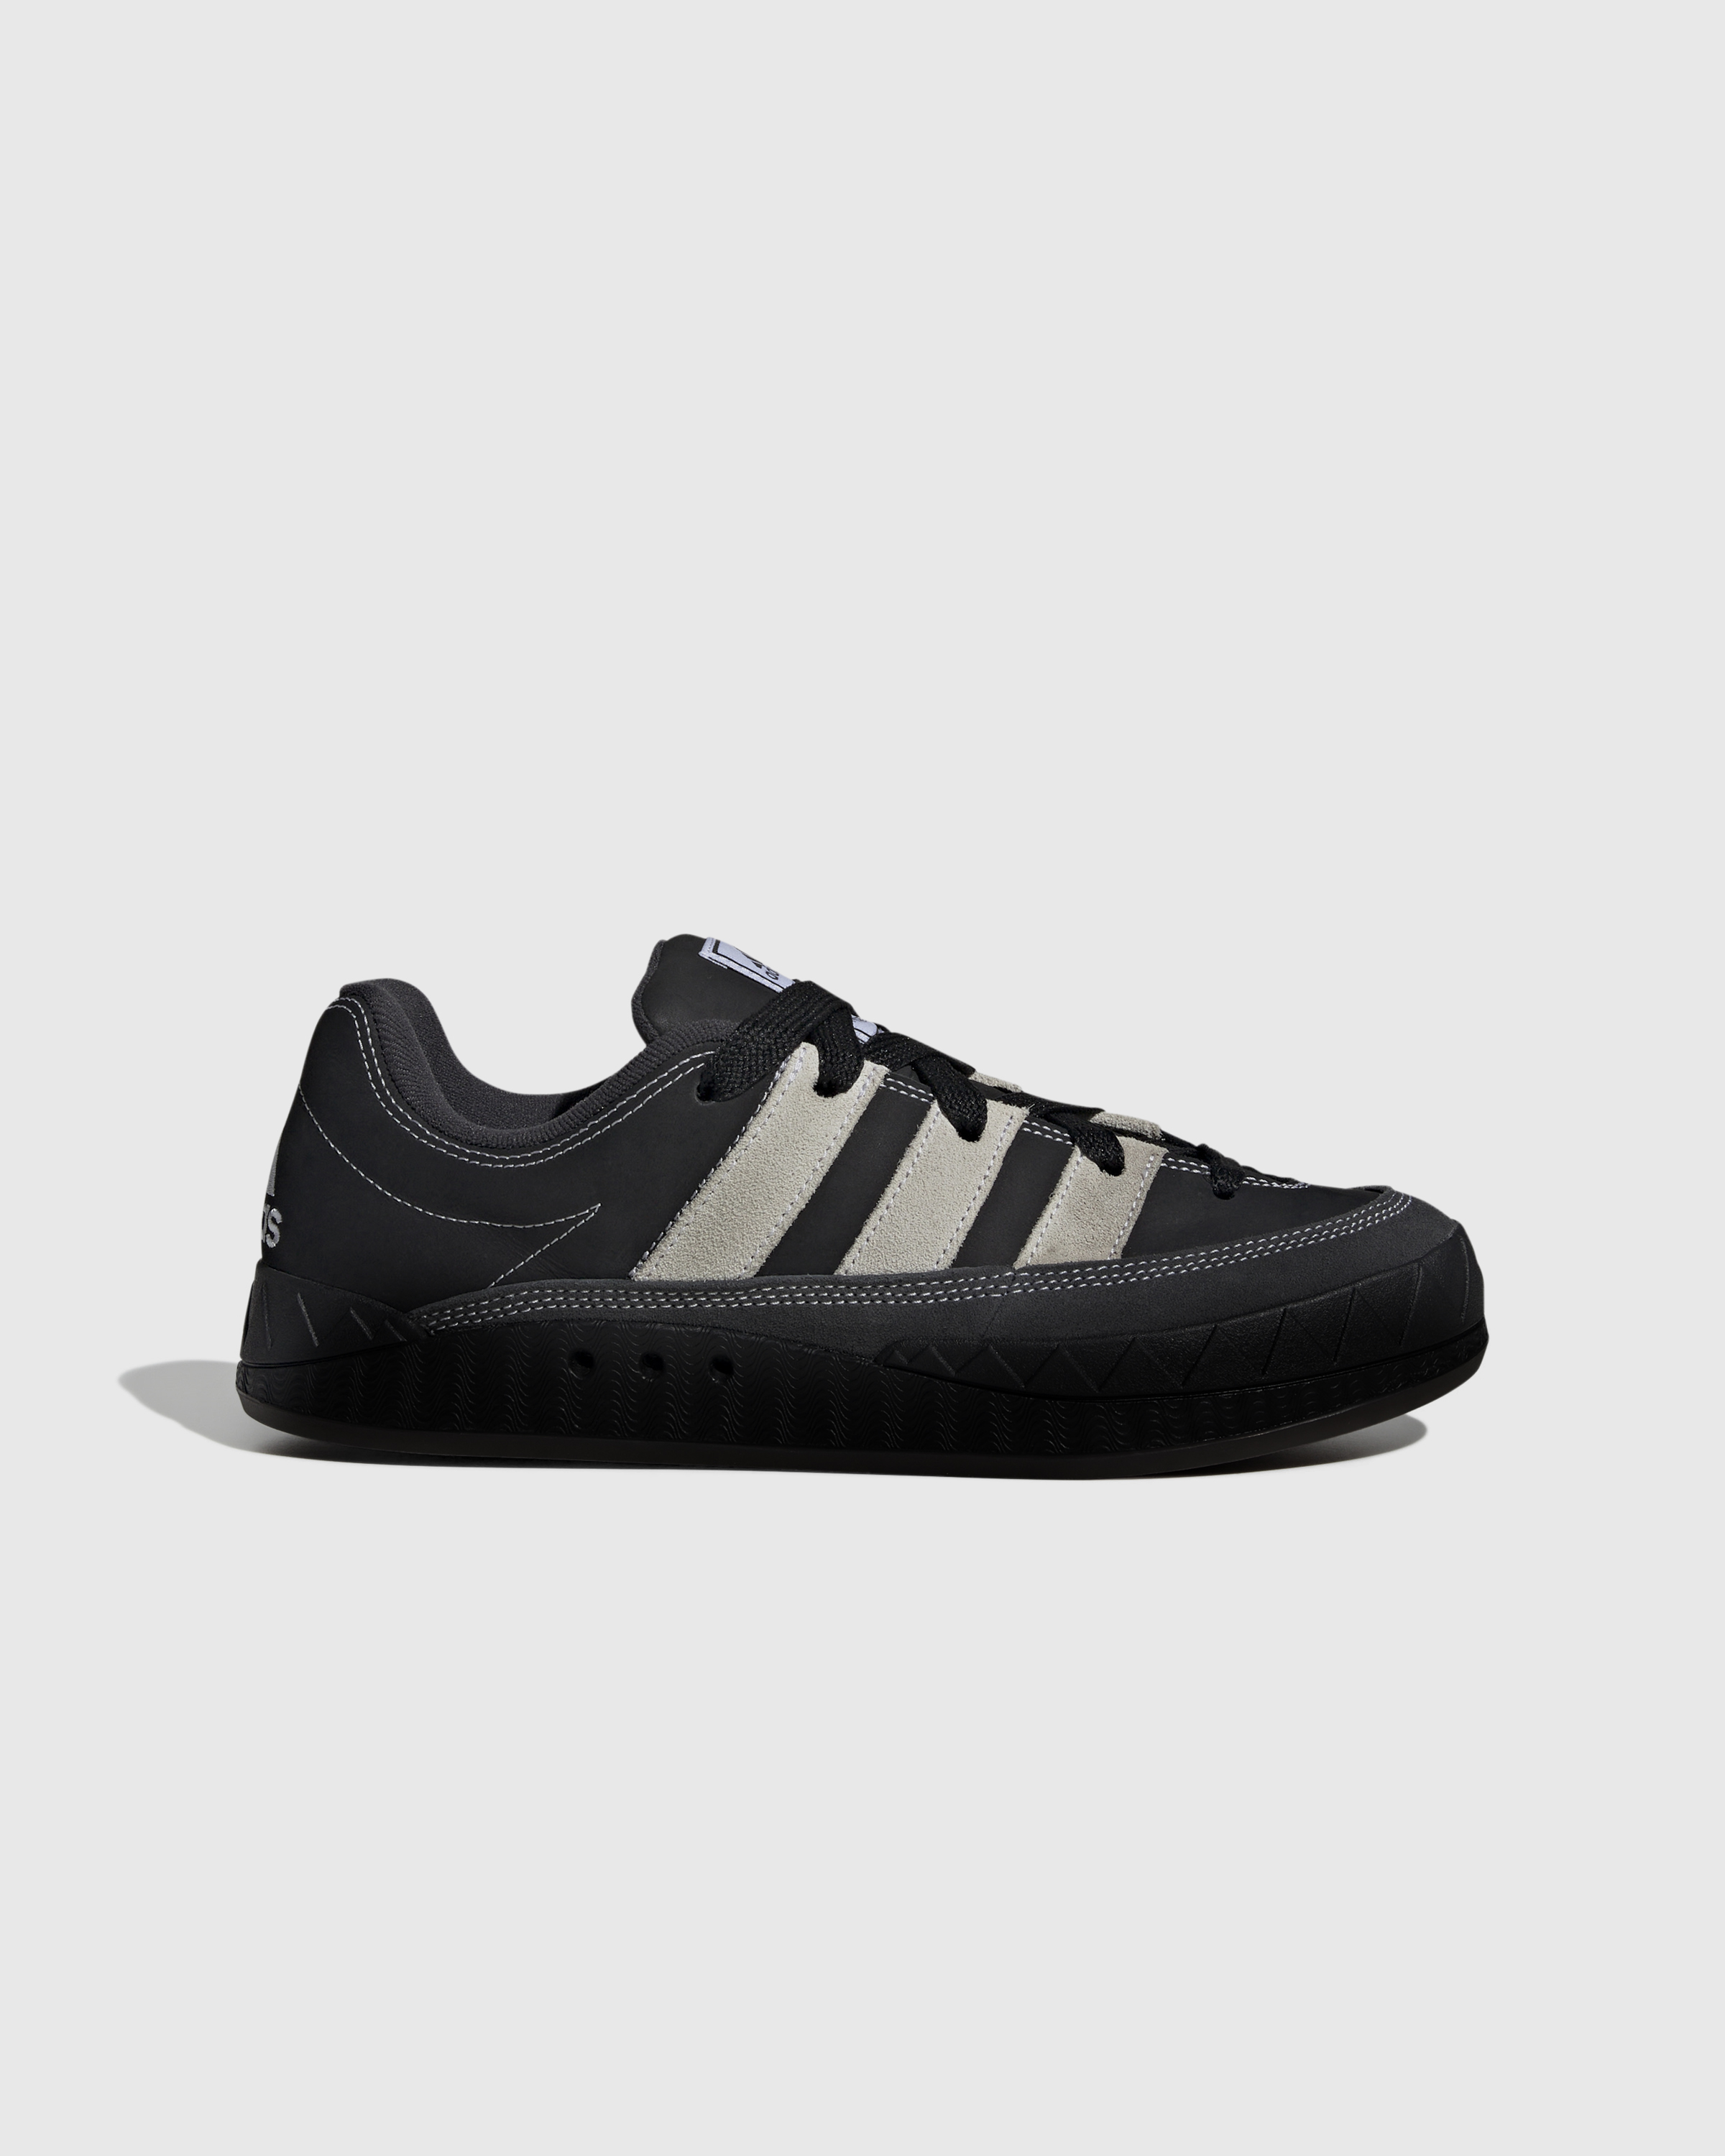 Adidas – Adimatic Black/White - Low Top Sneakers - Black - Image 1